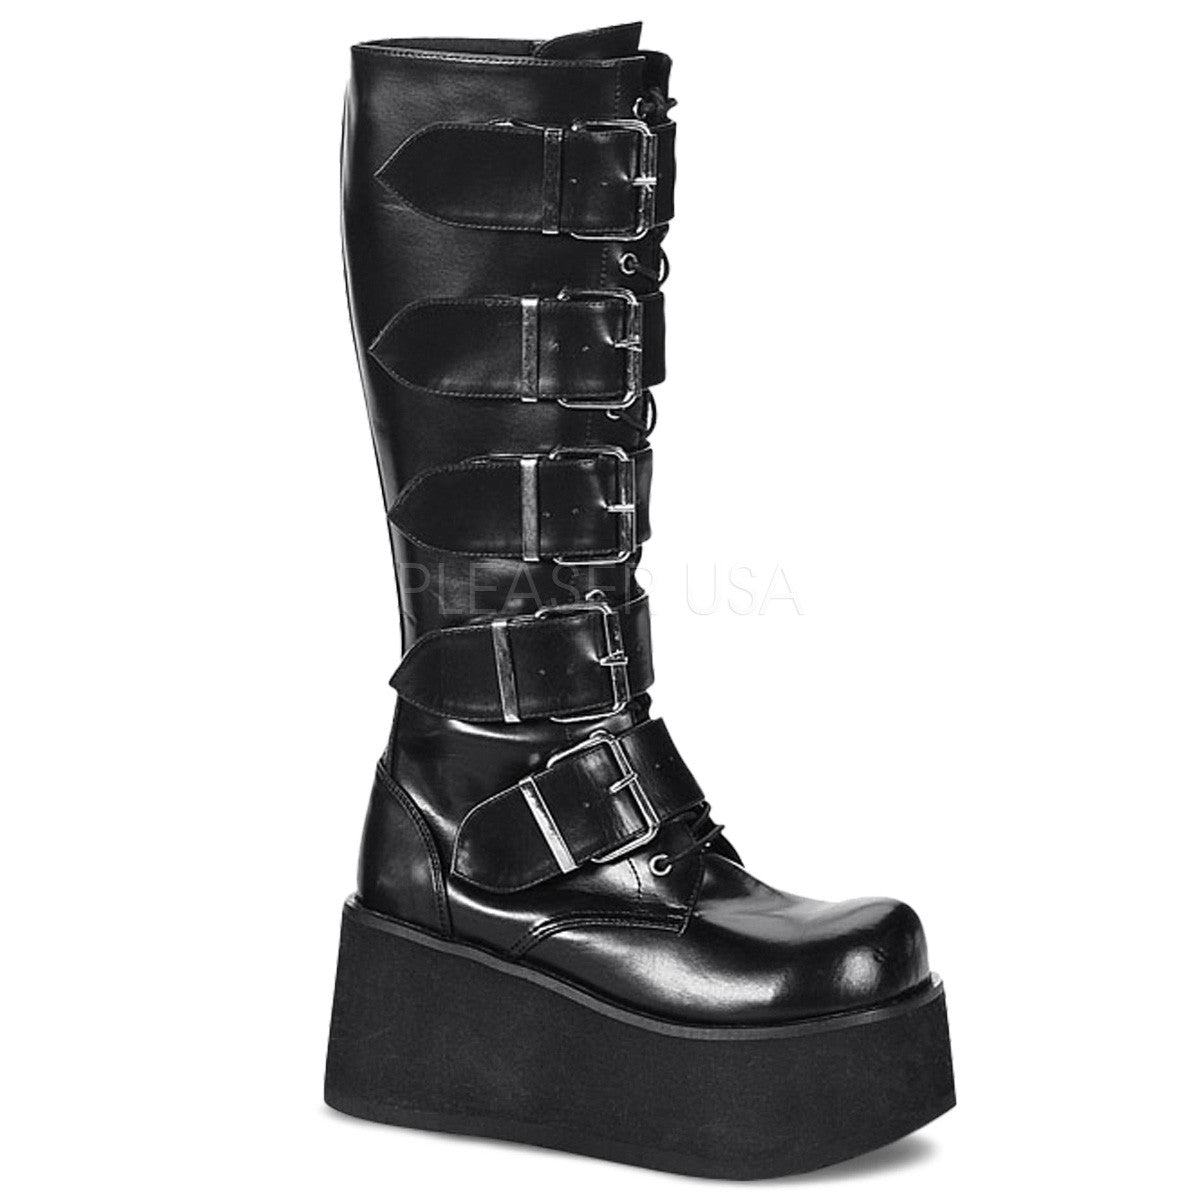 Demonia,DEMONIA TRASHVILLE-518 Men's Black Pu Vegan Boots - Shoecup.com